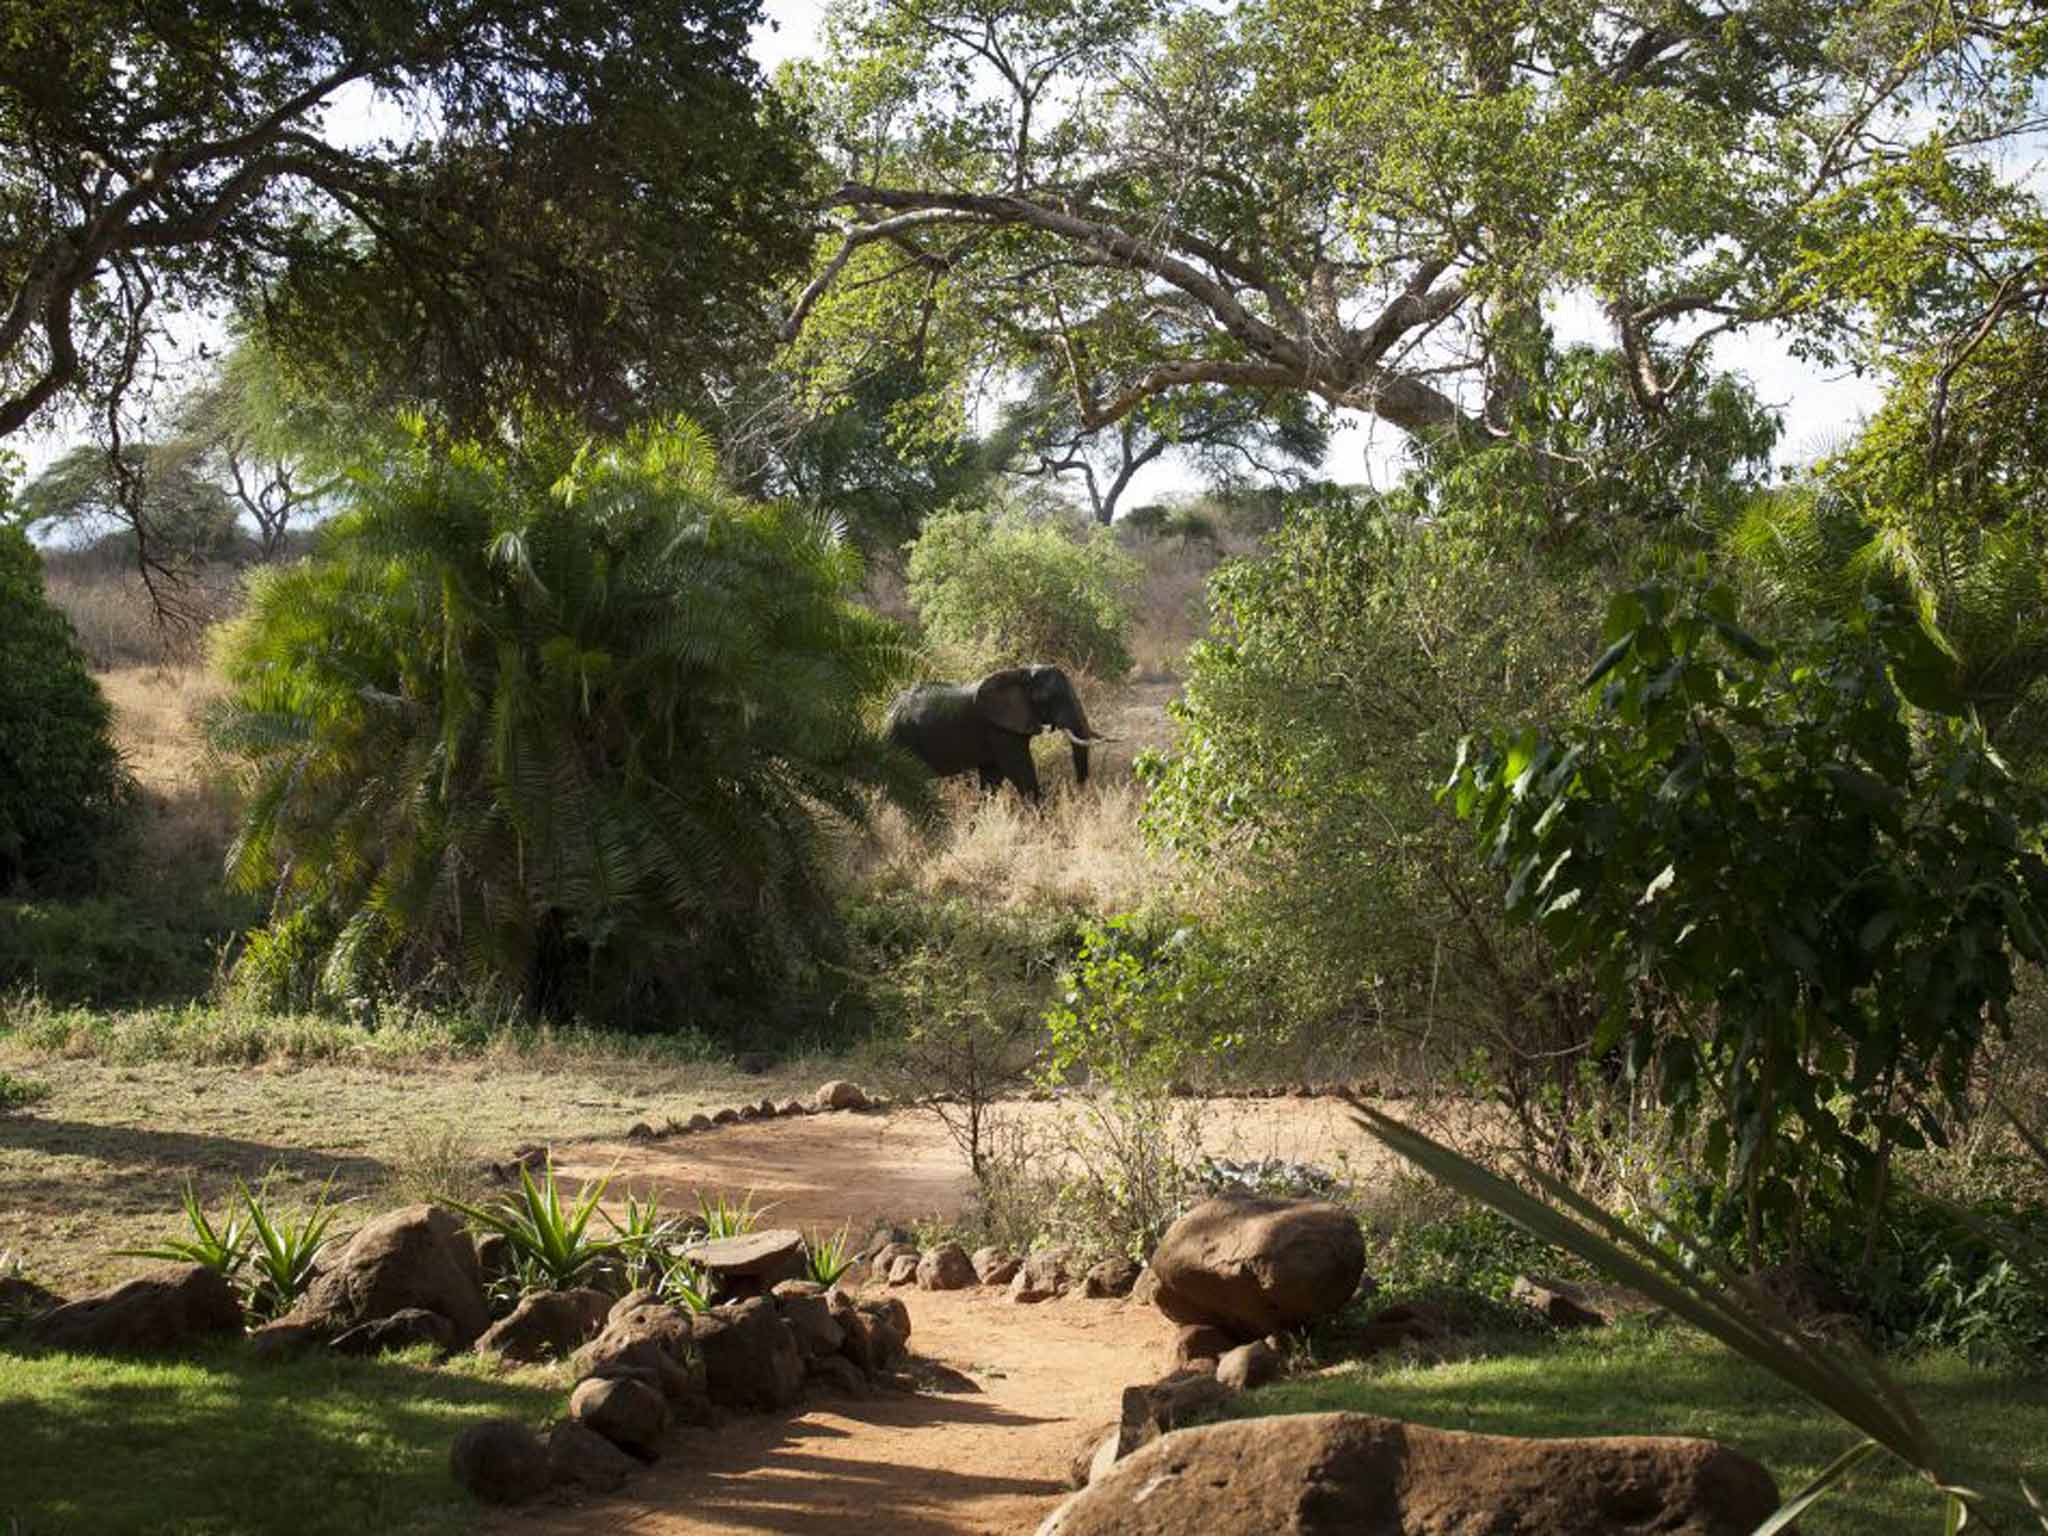 Careful where you walk in Kenya's national parks